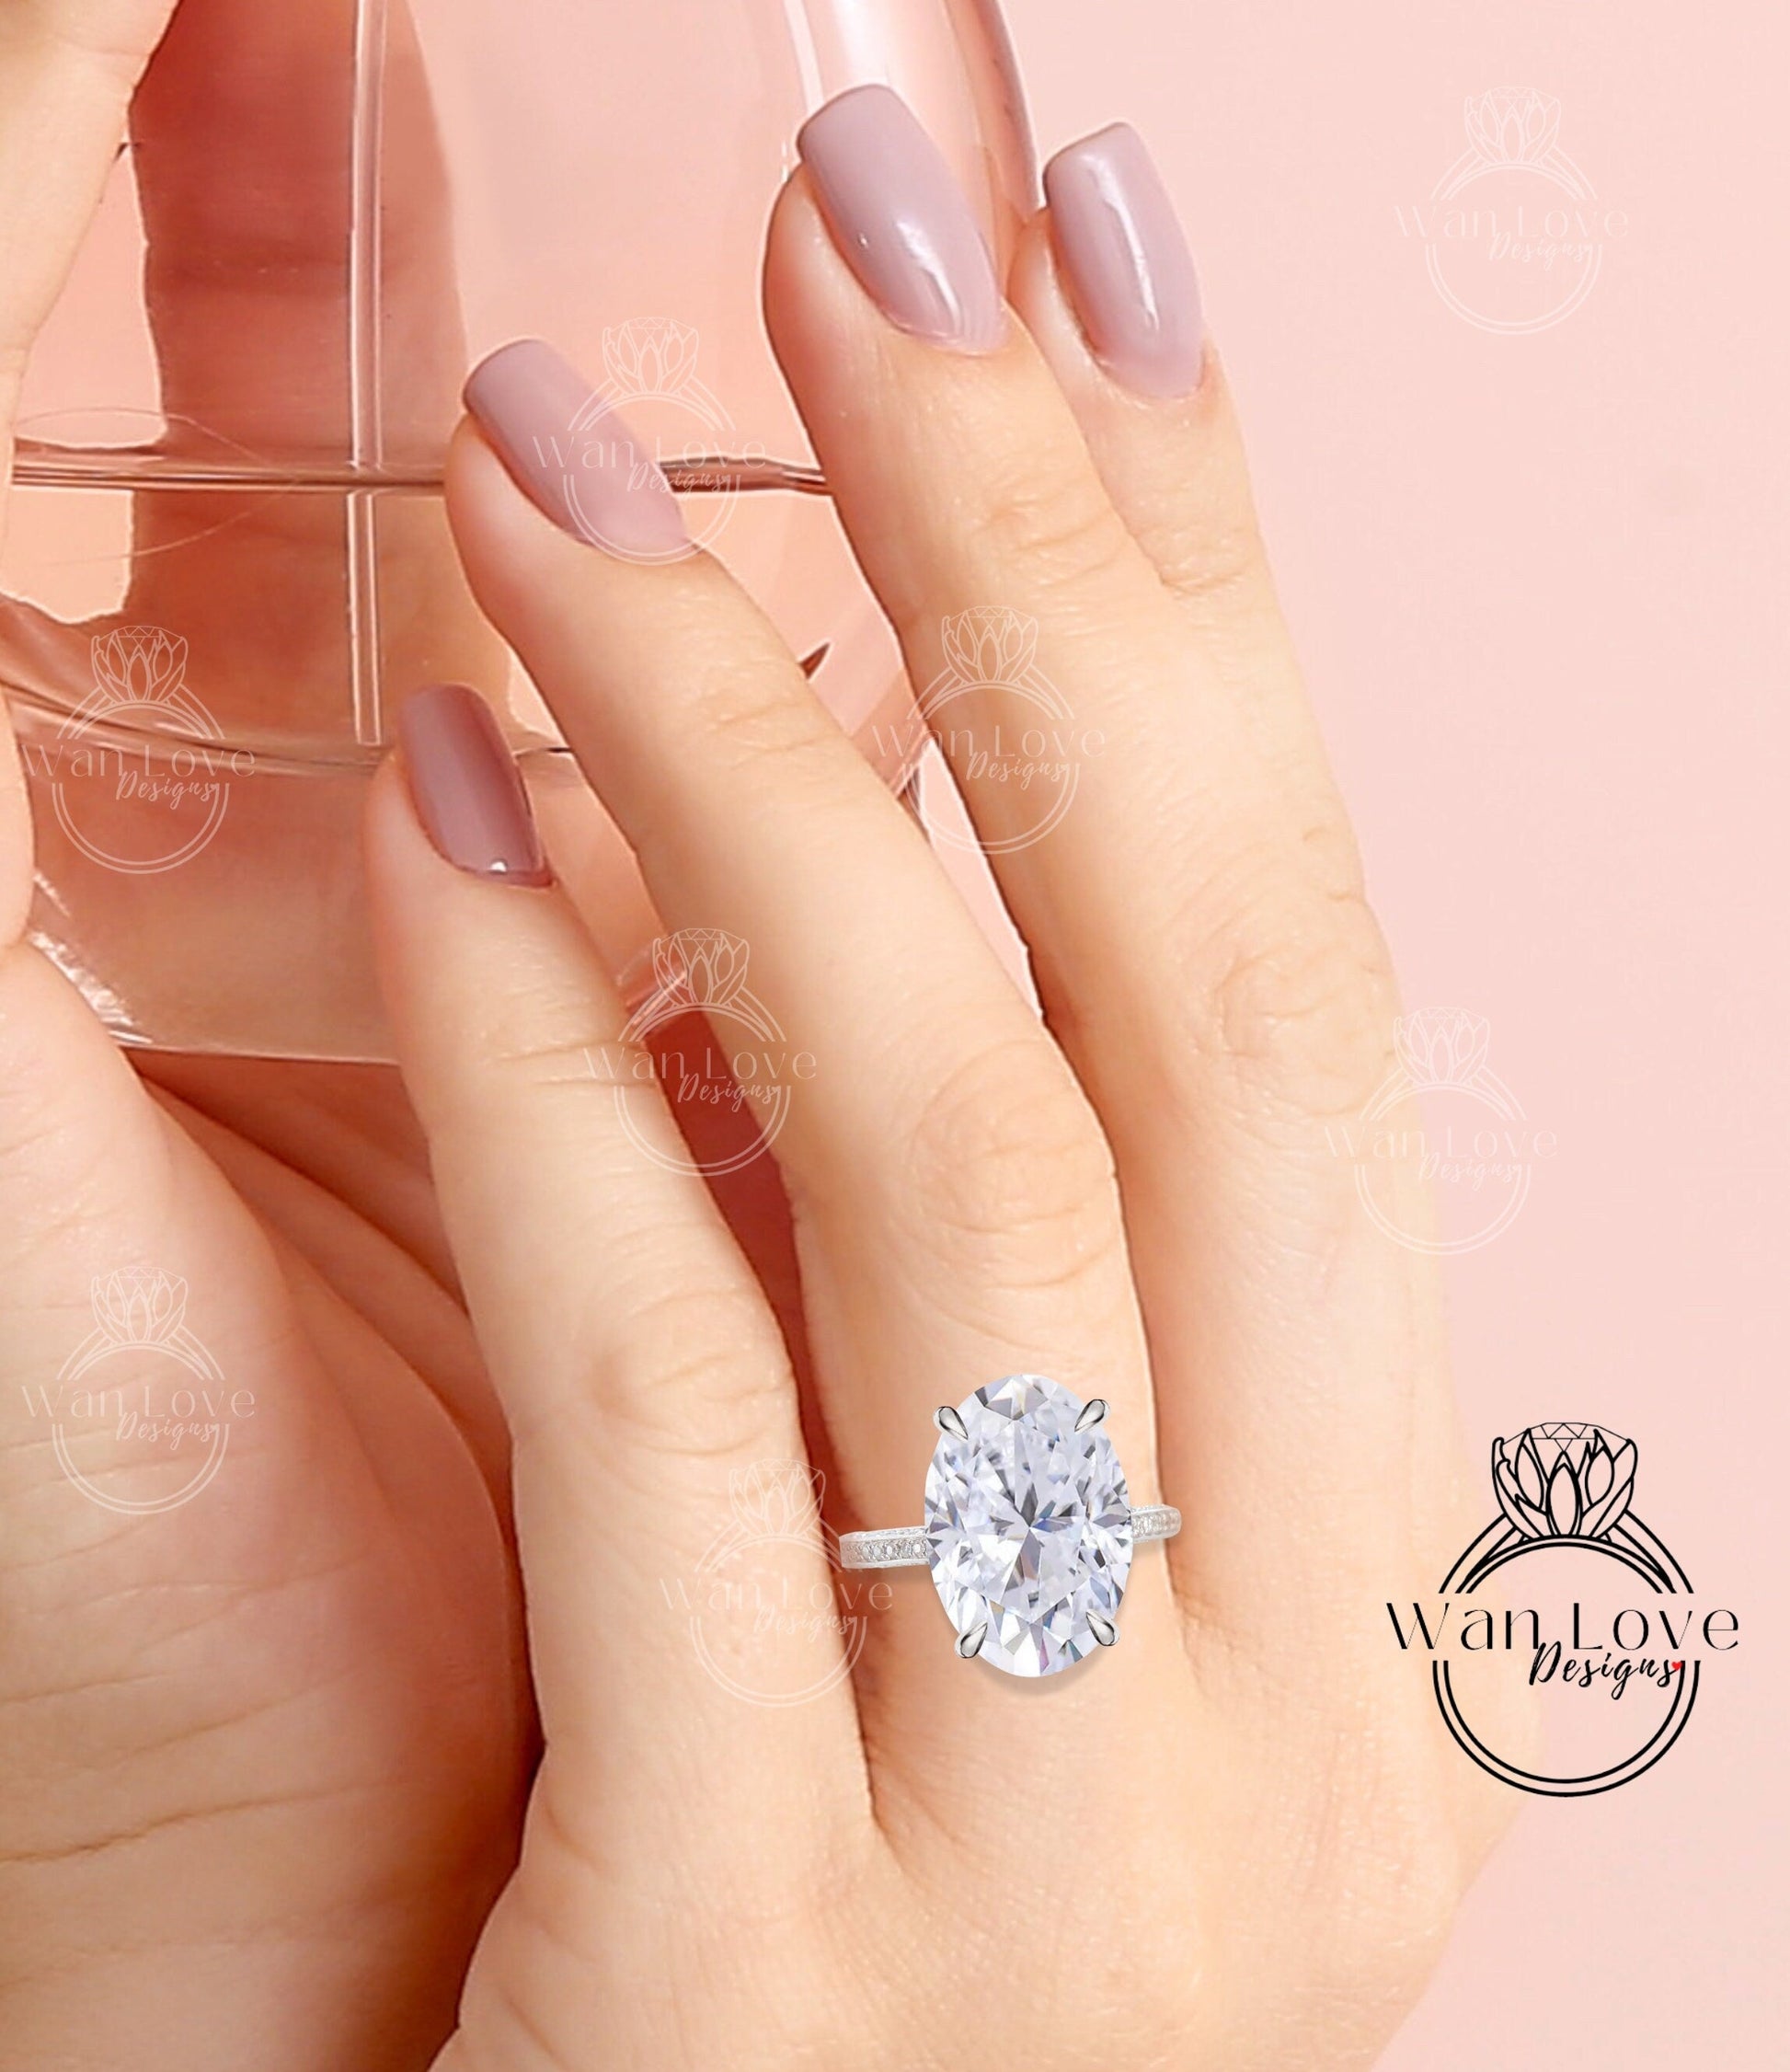 9ct Celebrity style Moissanite Diamond Engagement Ring, Oval cut Moissanite Ring, Diamonds side hidden halo ring, Bridal Wedding Ring her Wan Love Designs